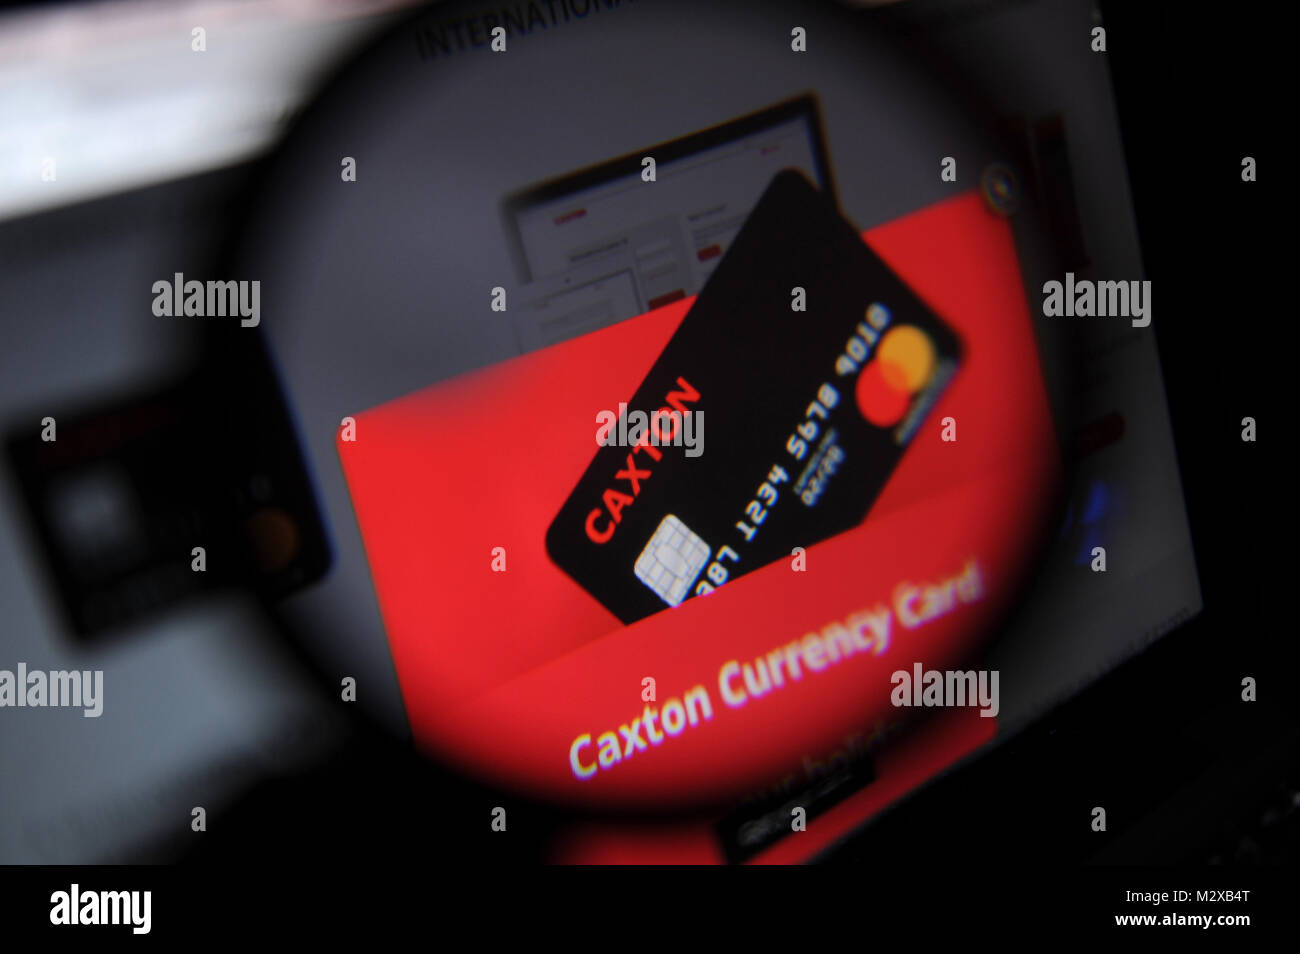 The Caxton FX website seen through a magnifying glass Stock Photo